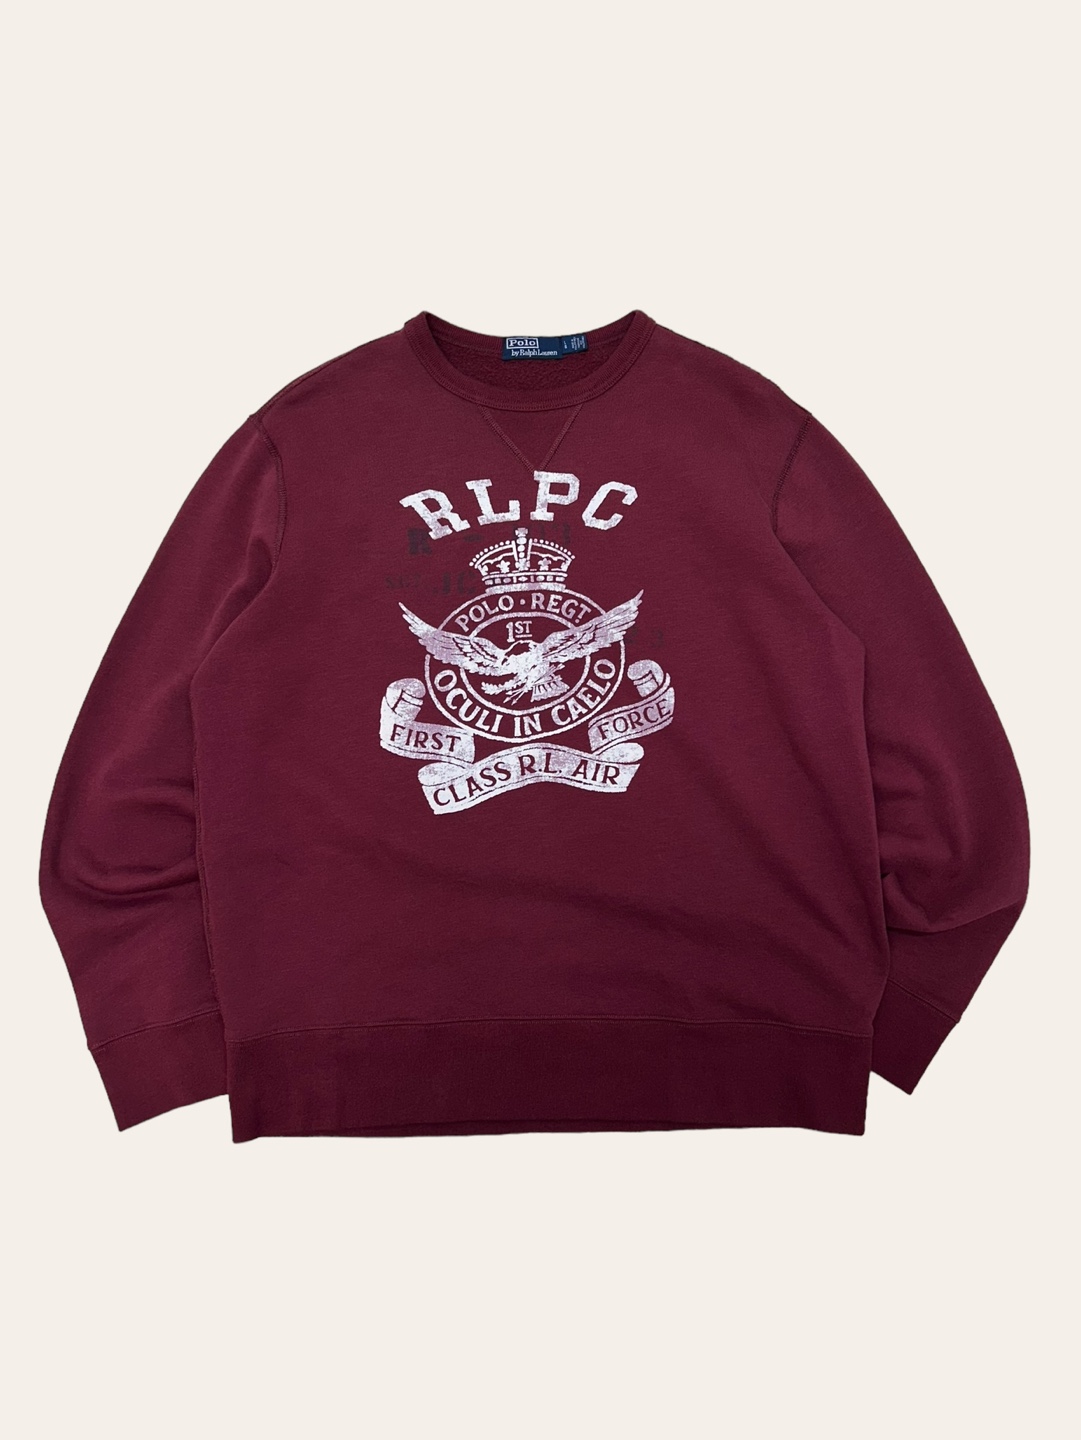 Polo ralph lauren burgundy RLPC printing sweatshirt L